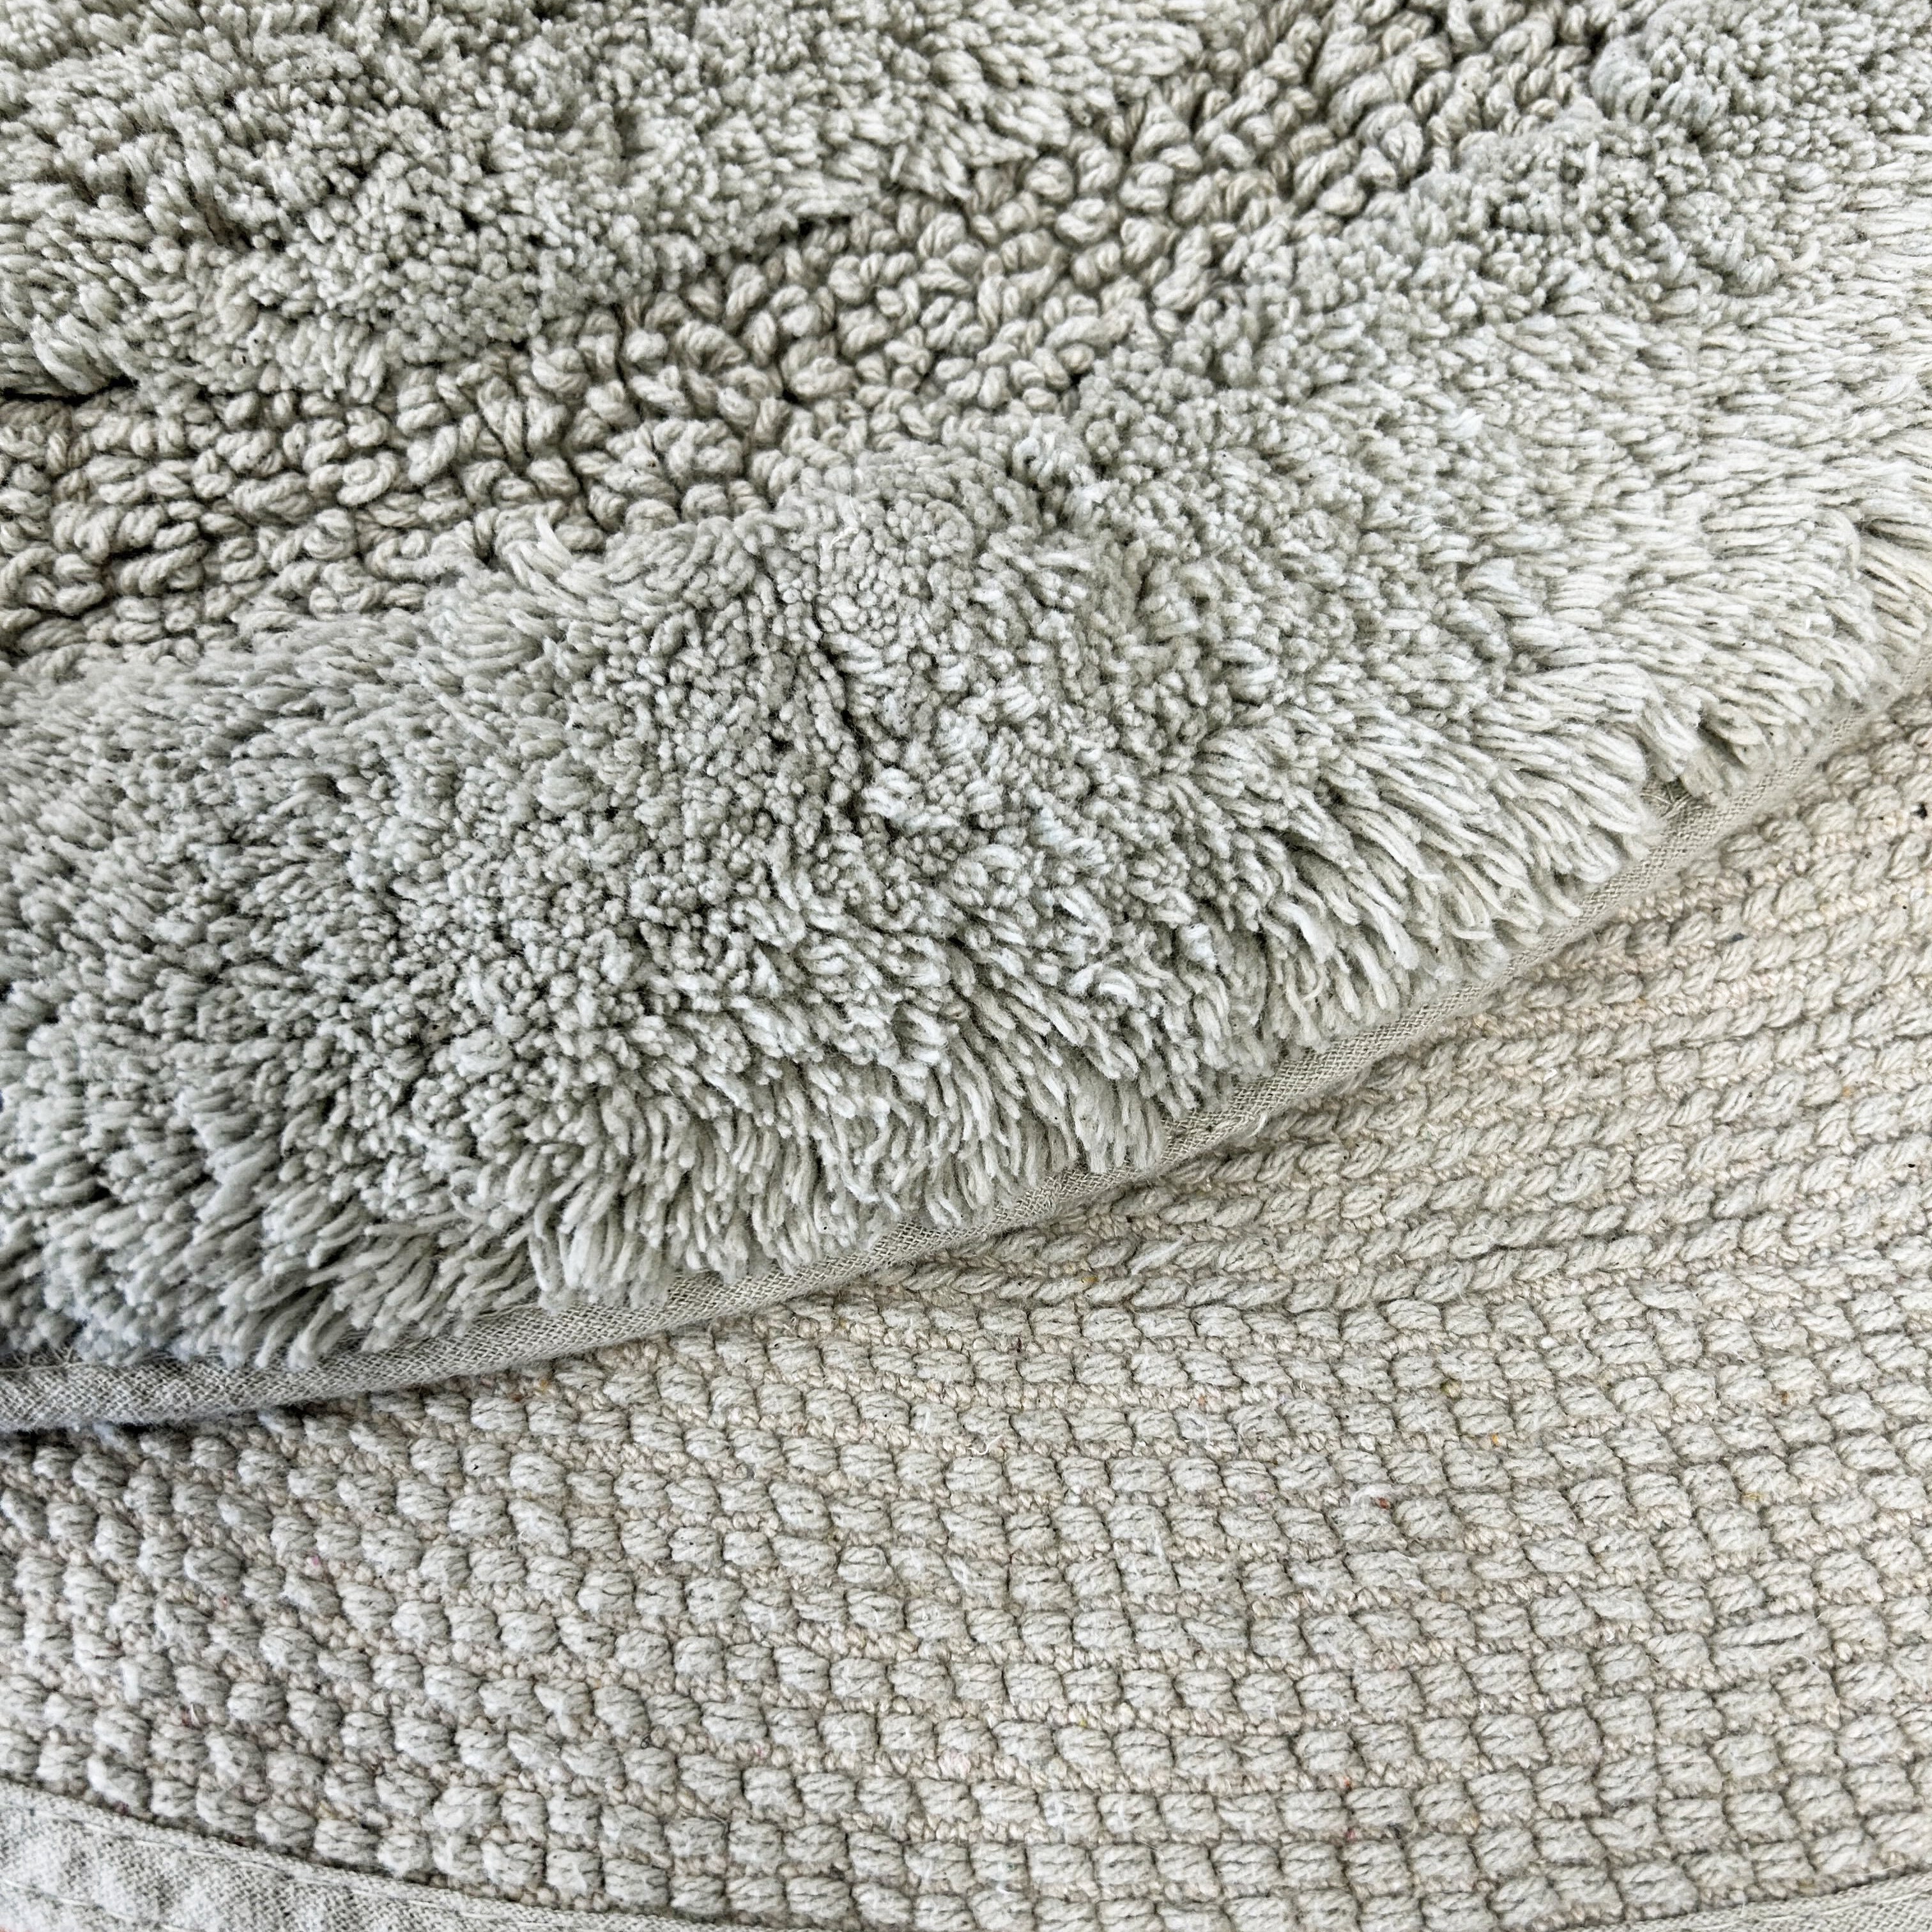 Close up of grey round bath mat